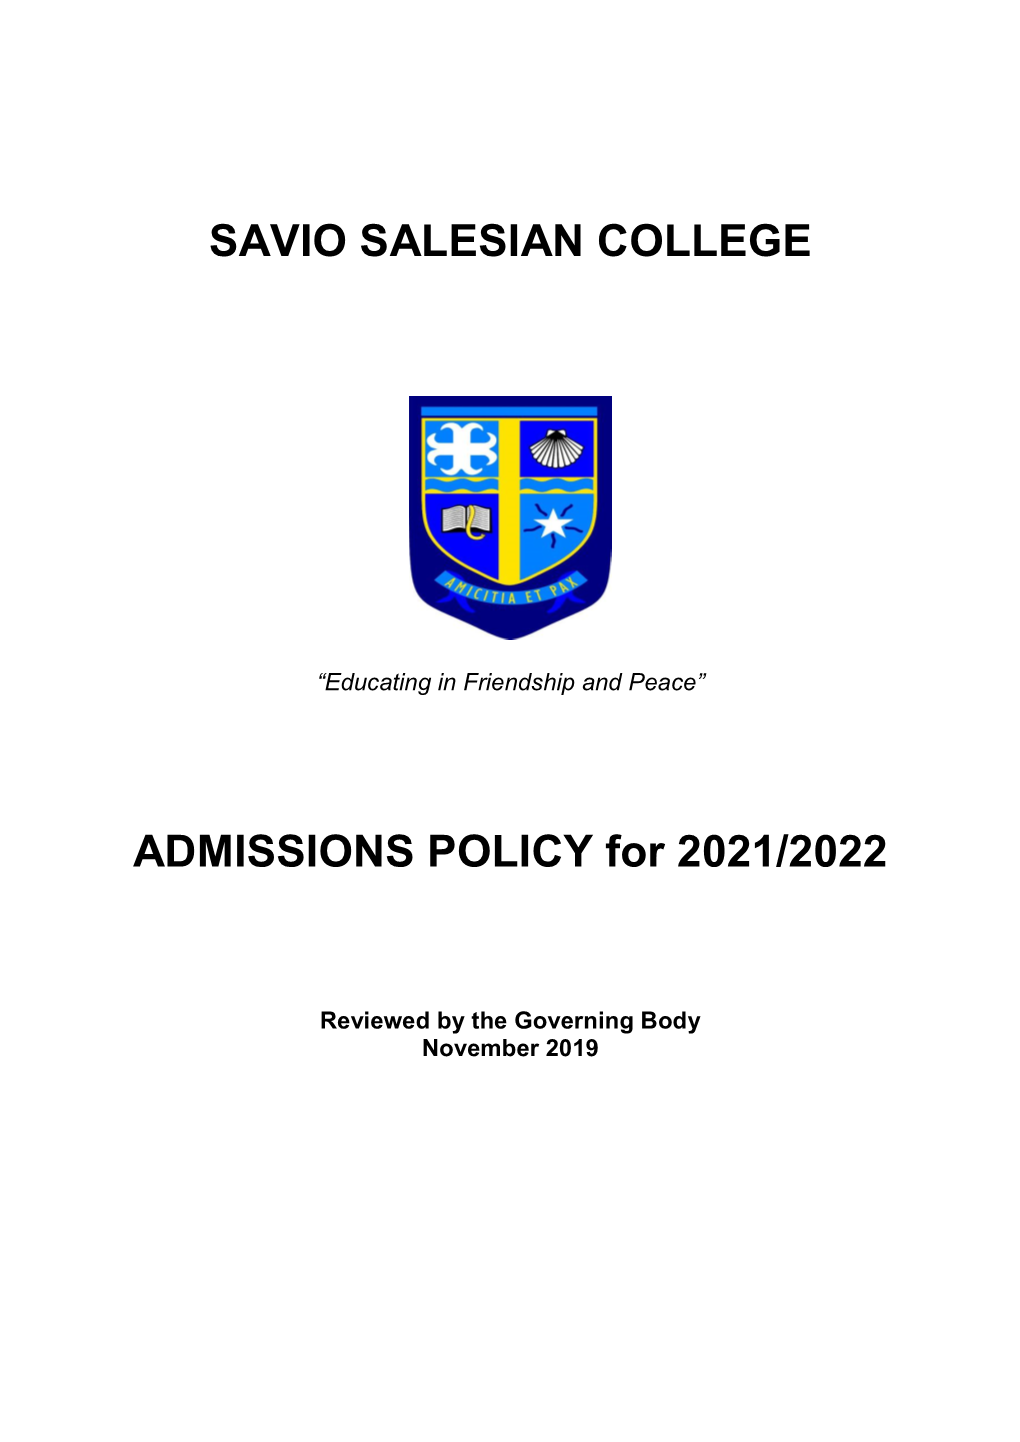 SAVIO SALESIAN COLLEGE ADMISSIONS POLICY for 2021/2022